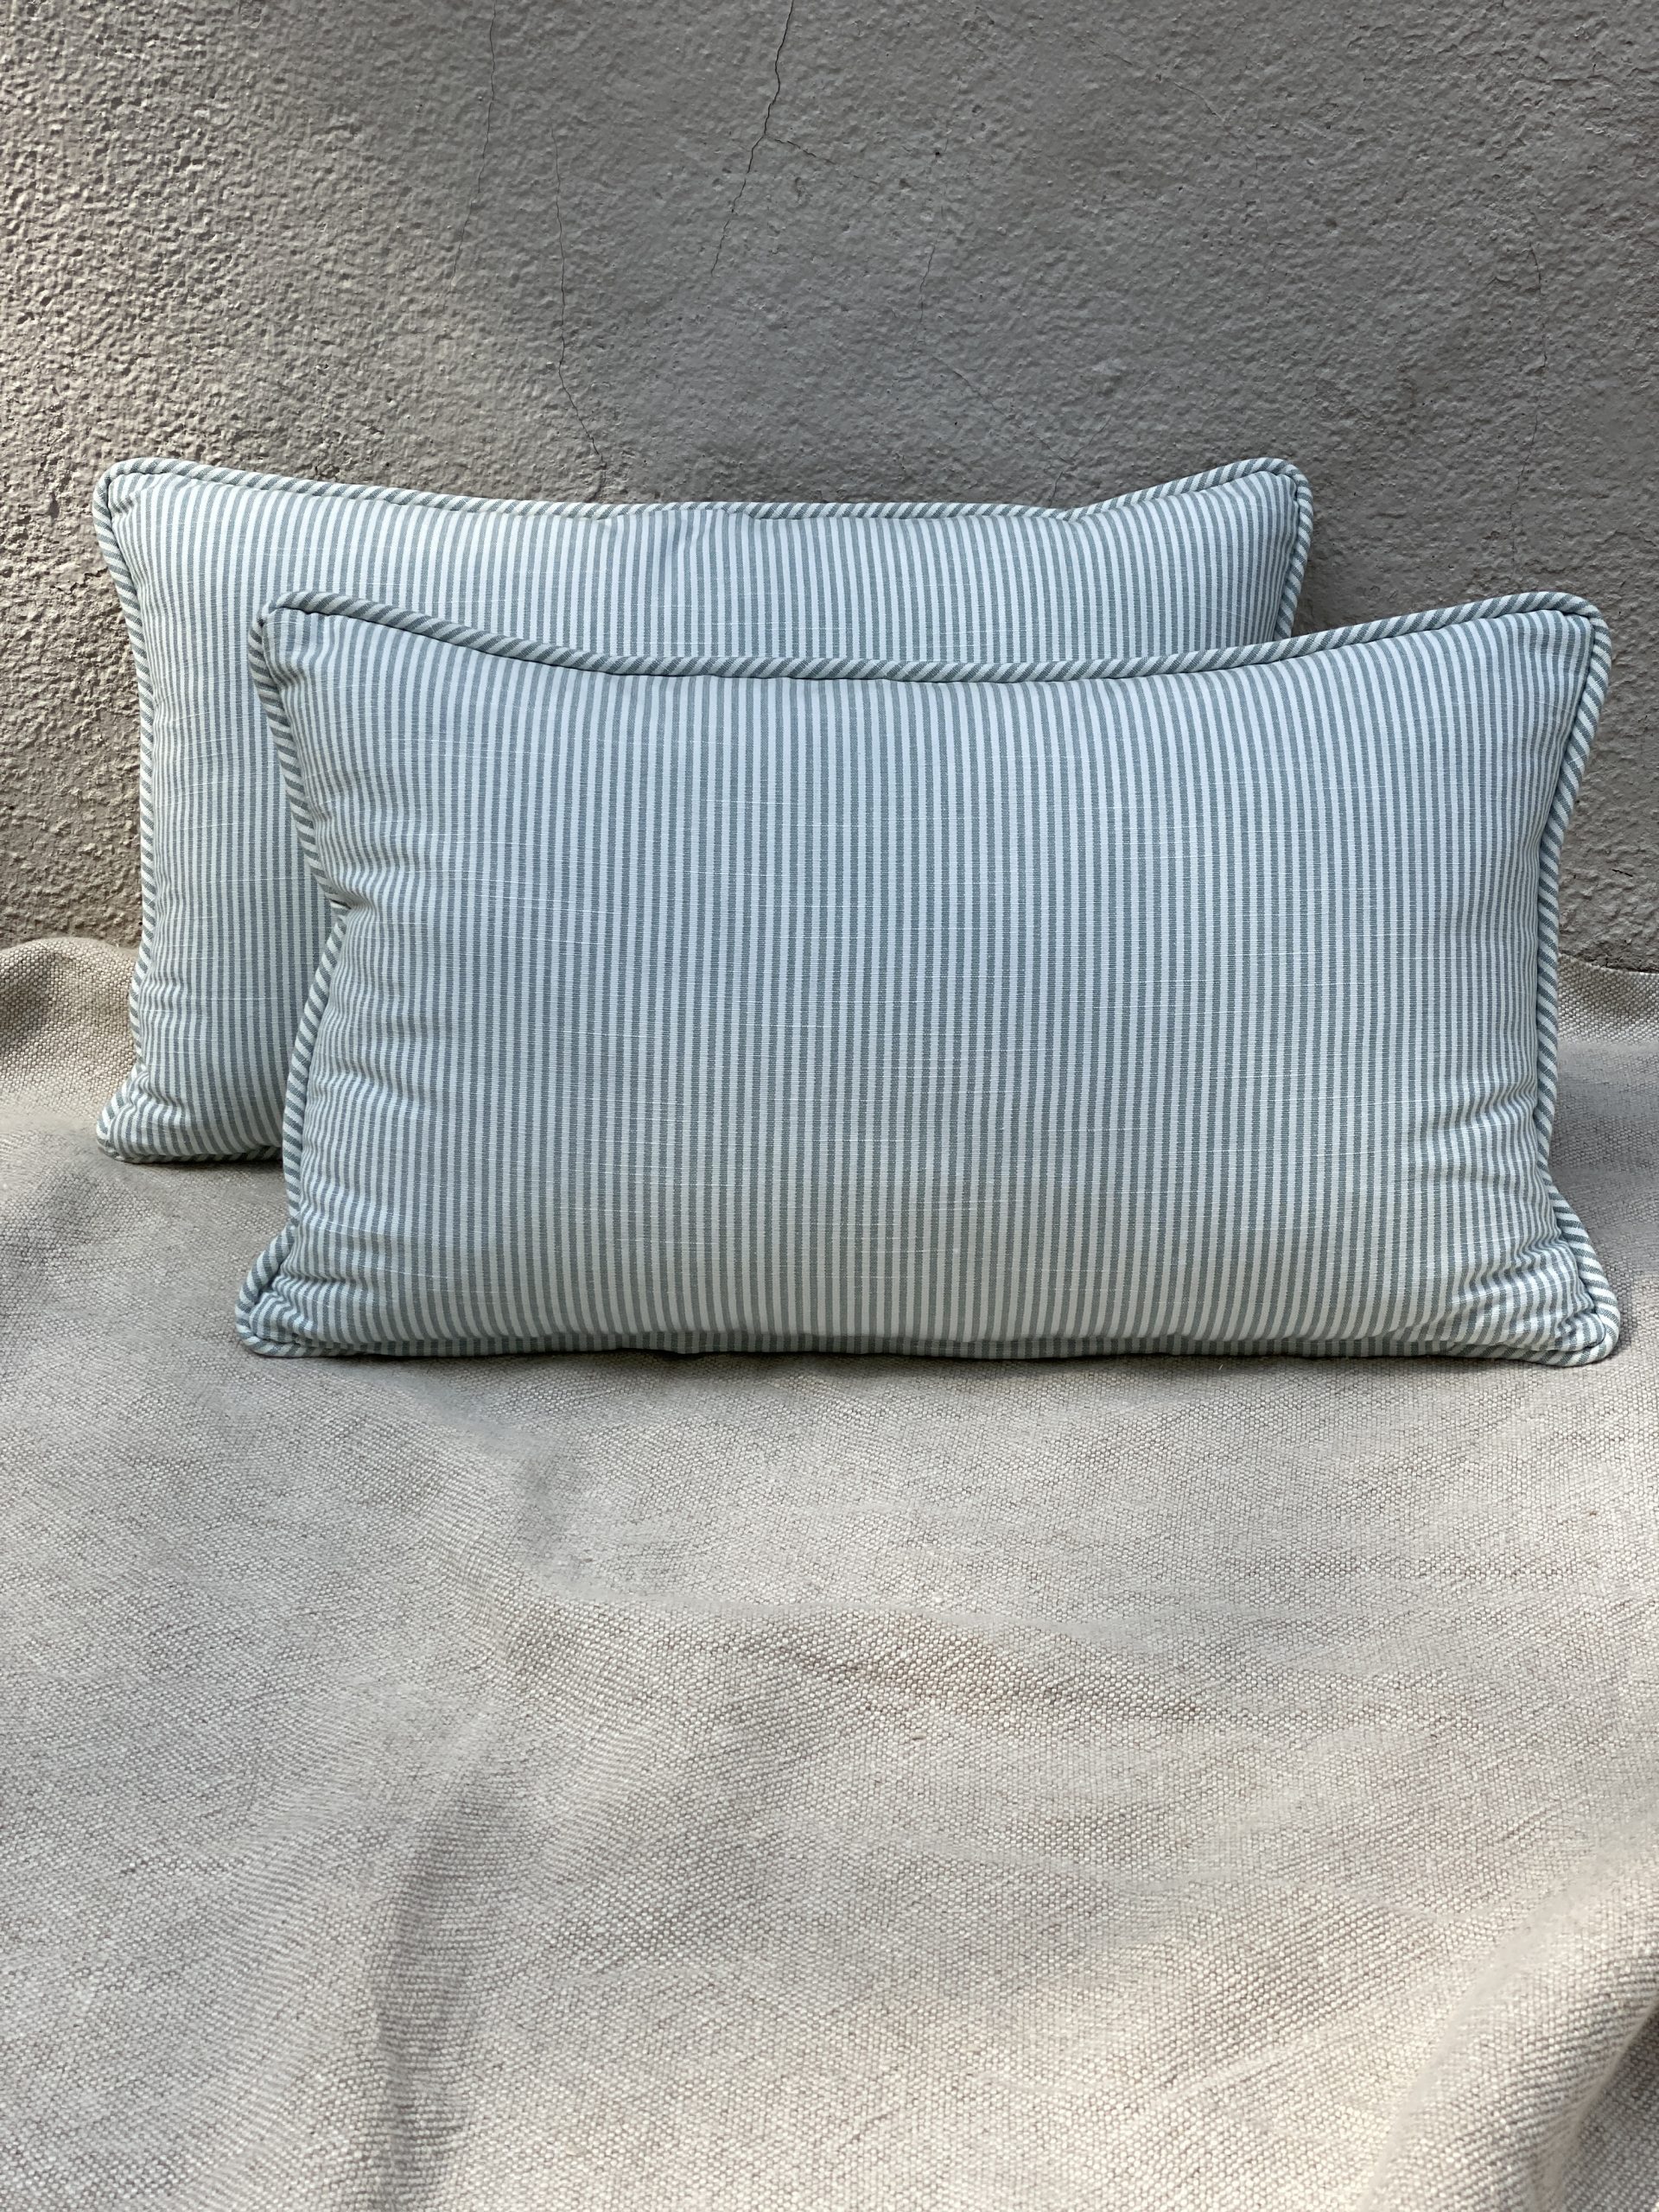 G Studio Pillows